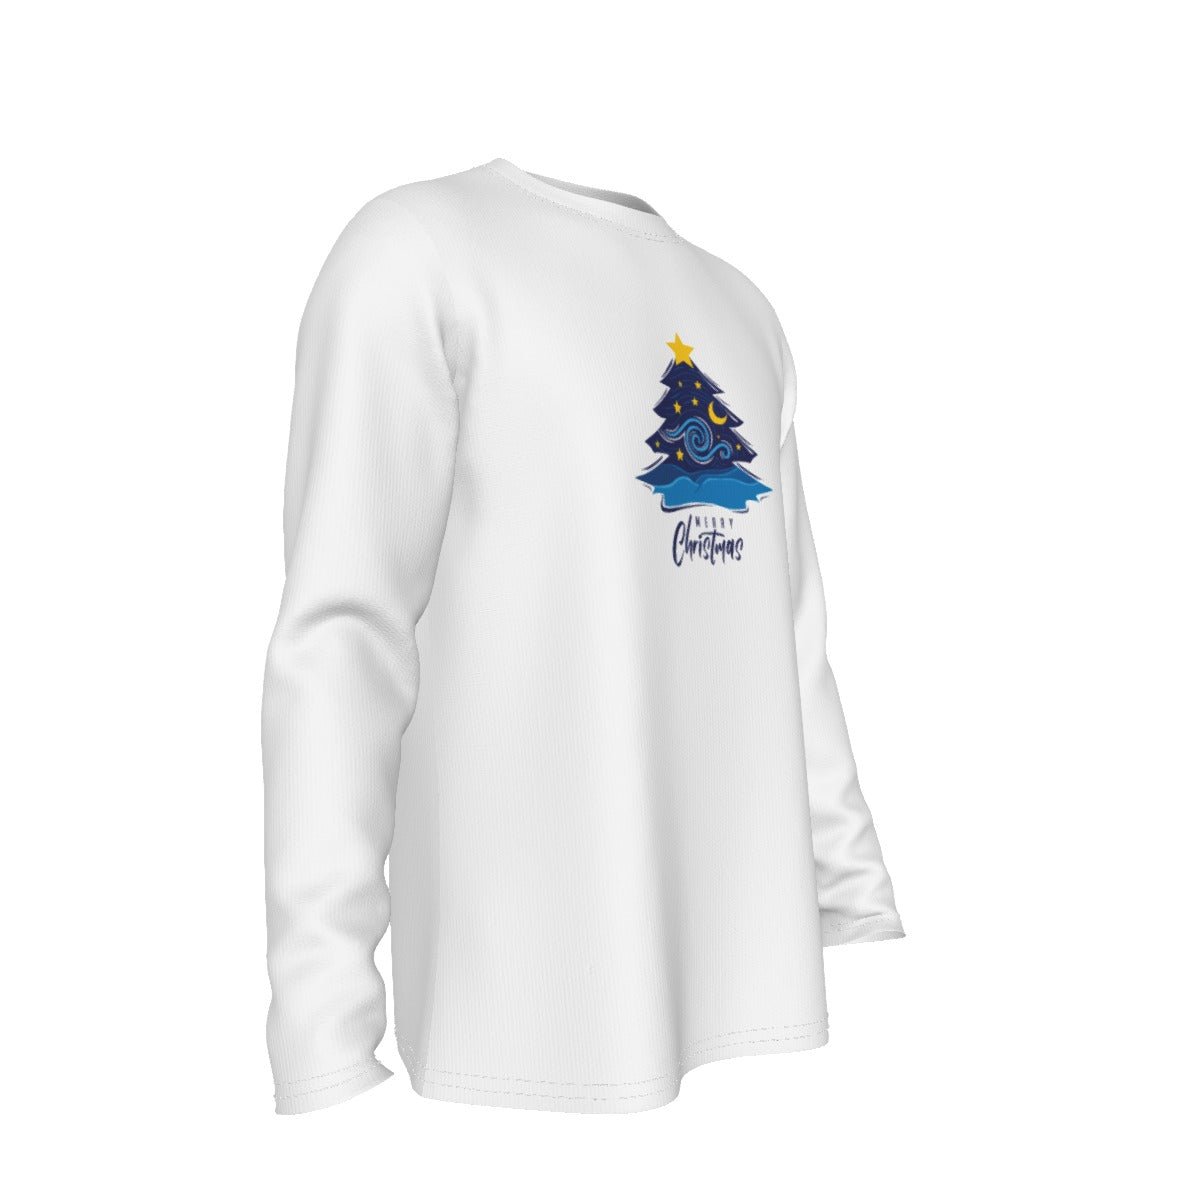 Men's Long Sleeve Christmas T-Shirt - Merry Christmas - Blue Tree - Festive Style